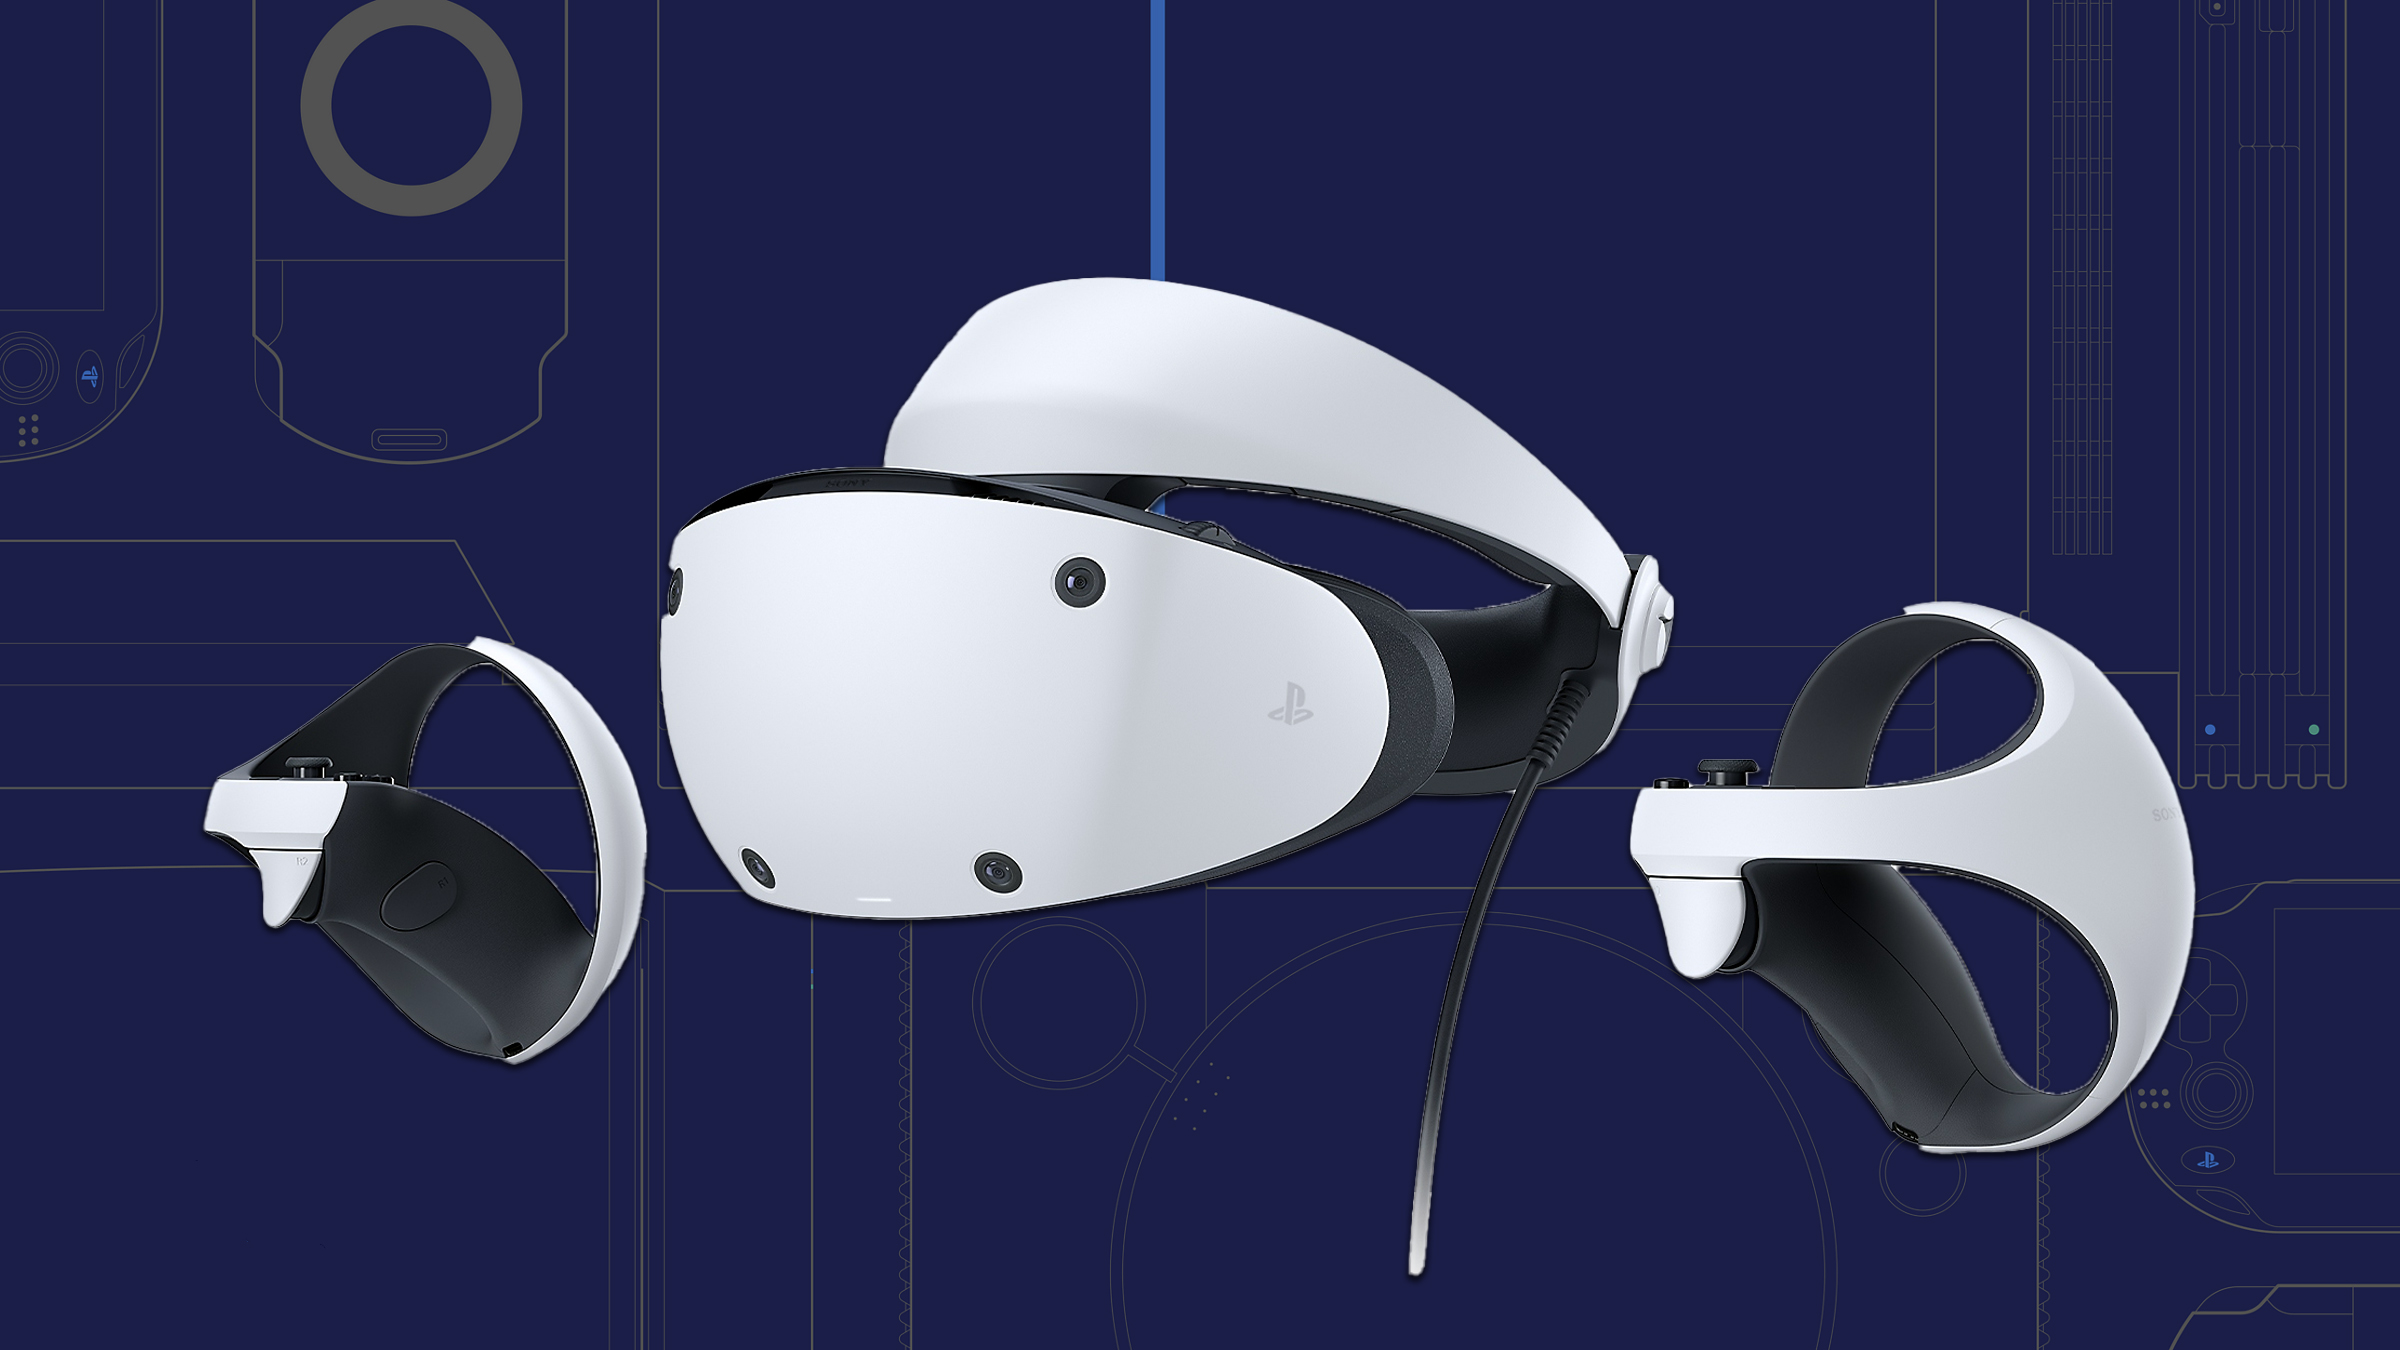 Leger Empirisch kraai PSVR vs. PSVR 2: The difference between the Sony VR headsets | Digital  Trends